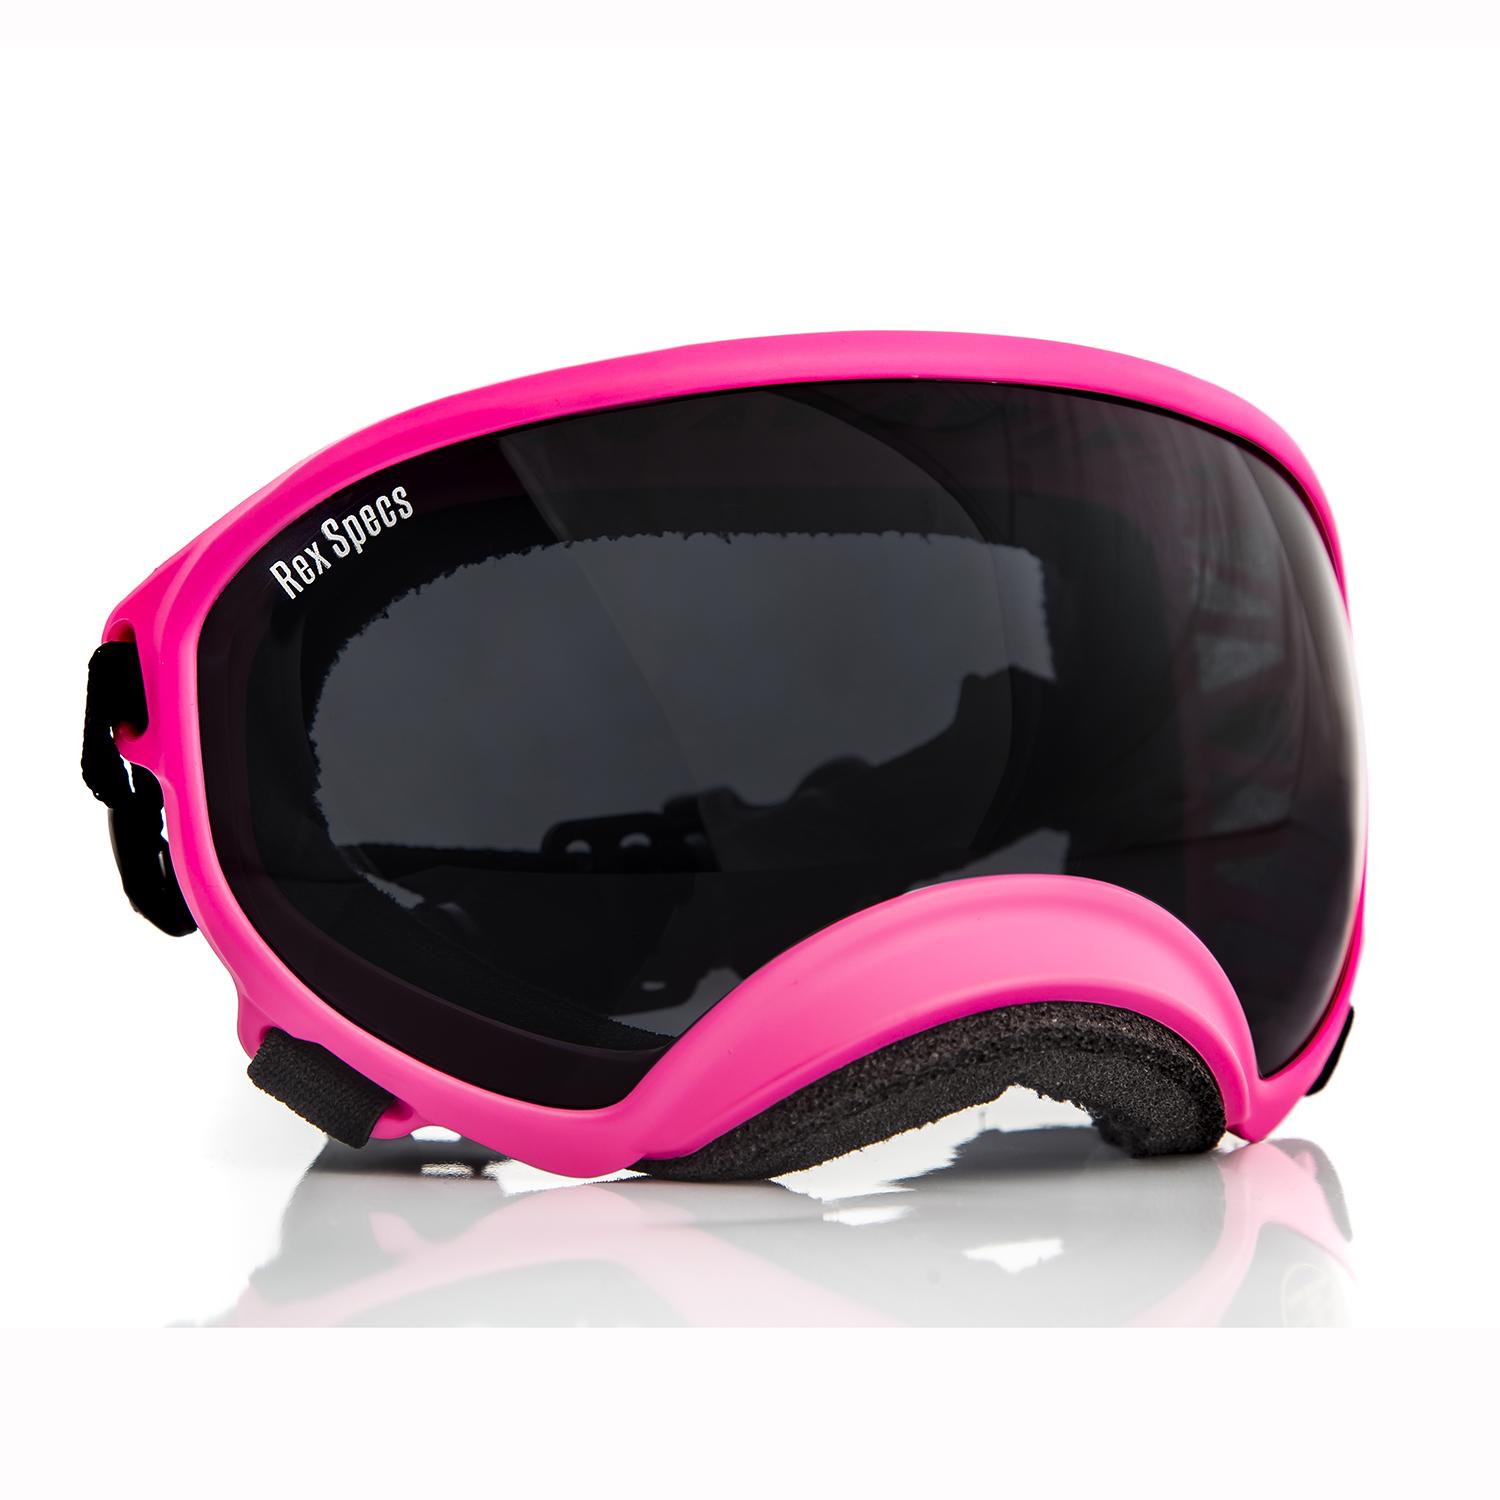 Rex Specs Dog Goggles - Neon Pink